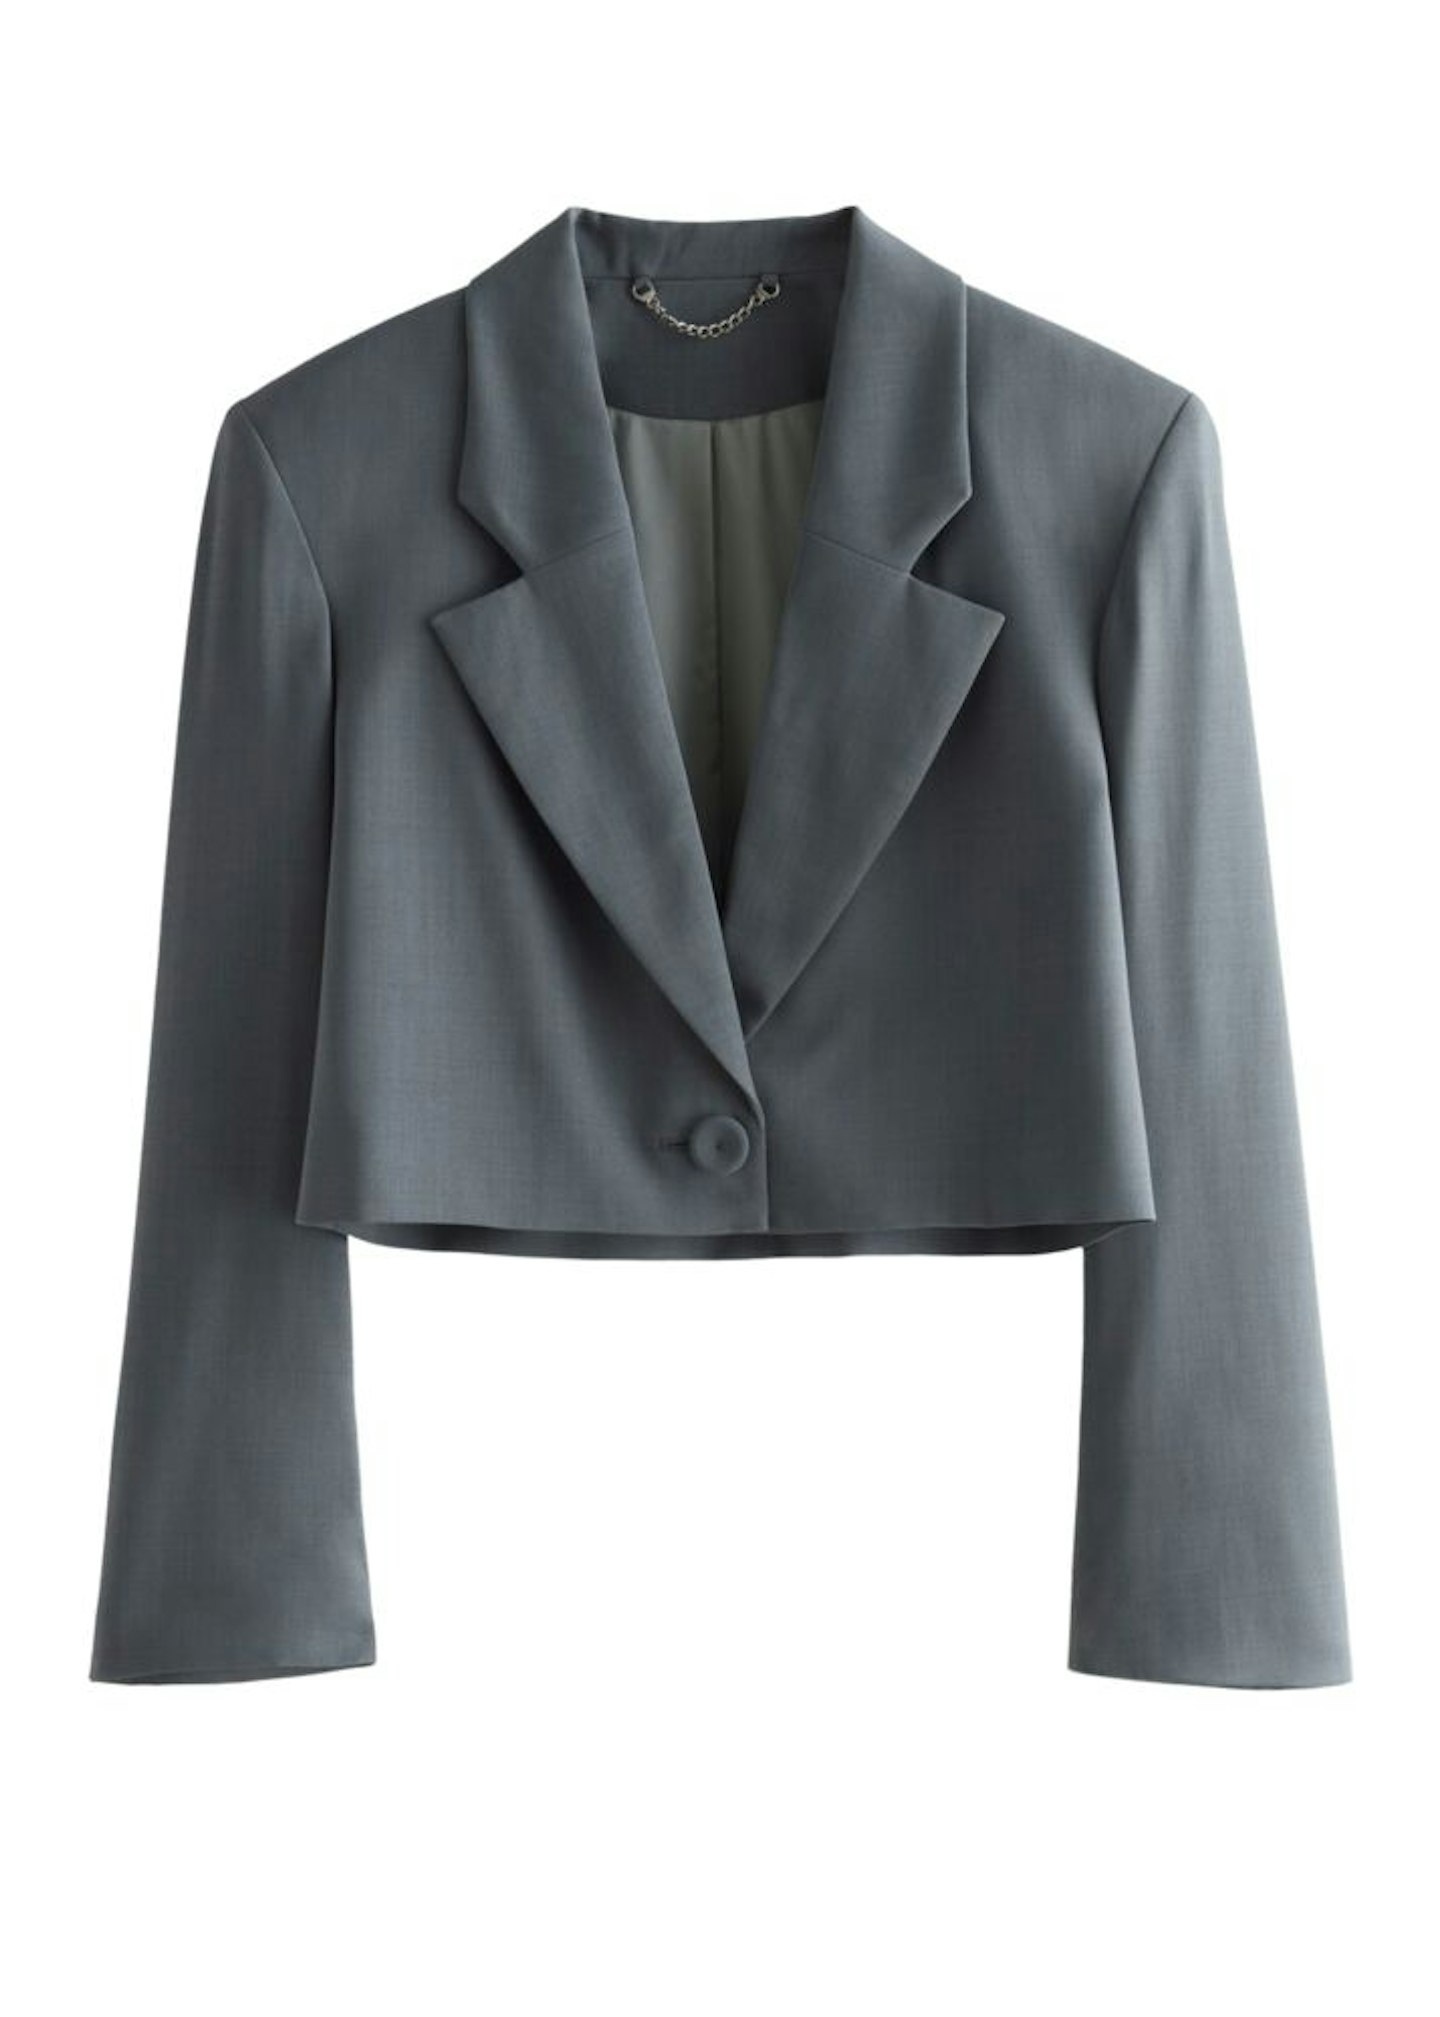 Rejina Pyo & Other Stories, Grey Jacket, £135